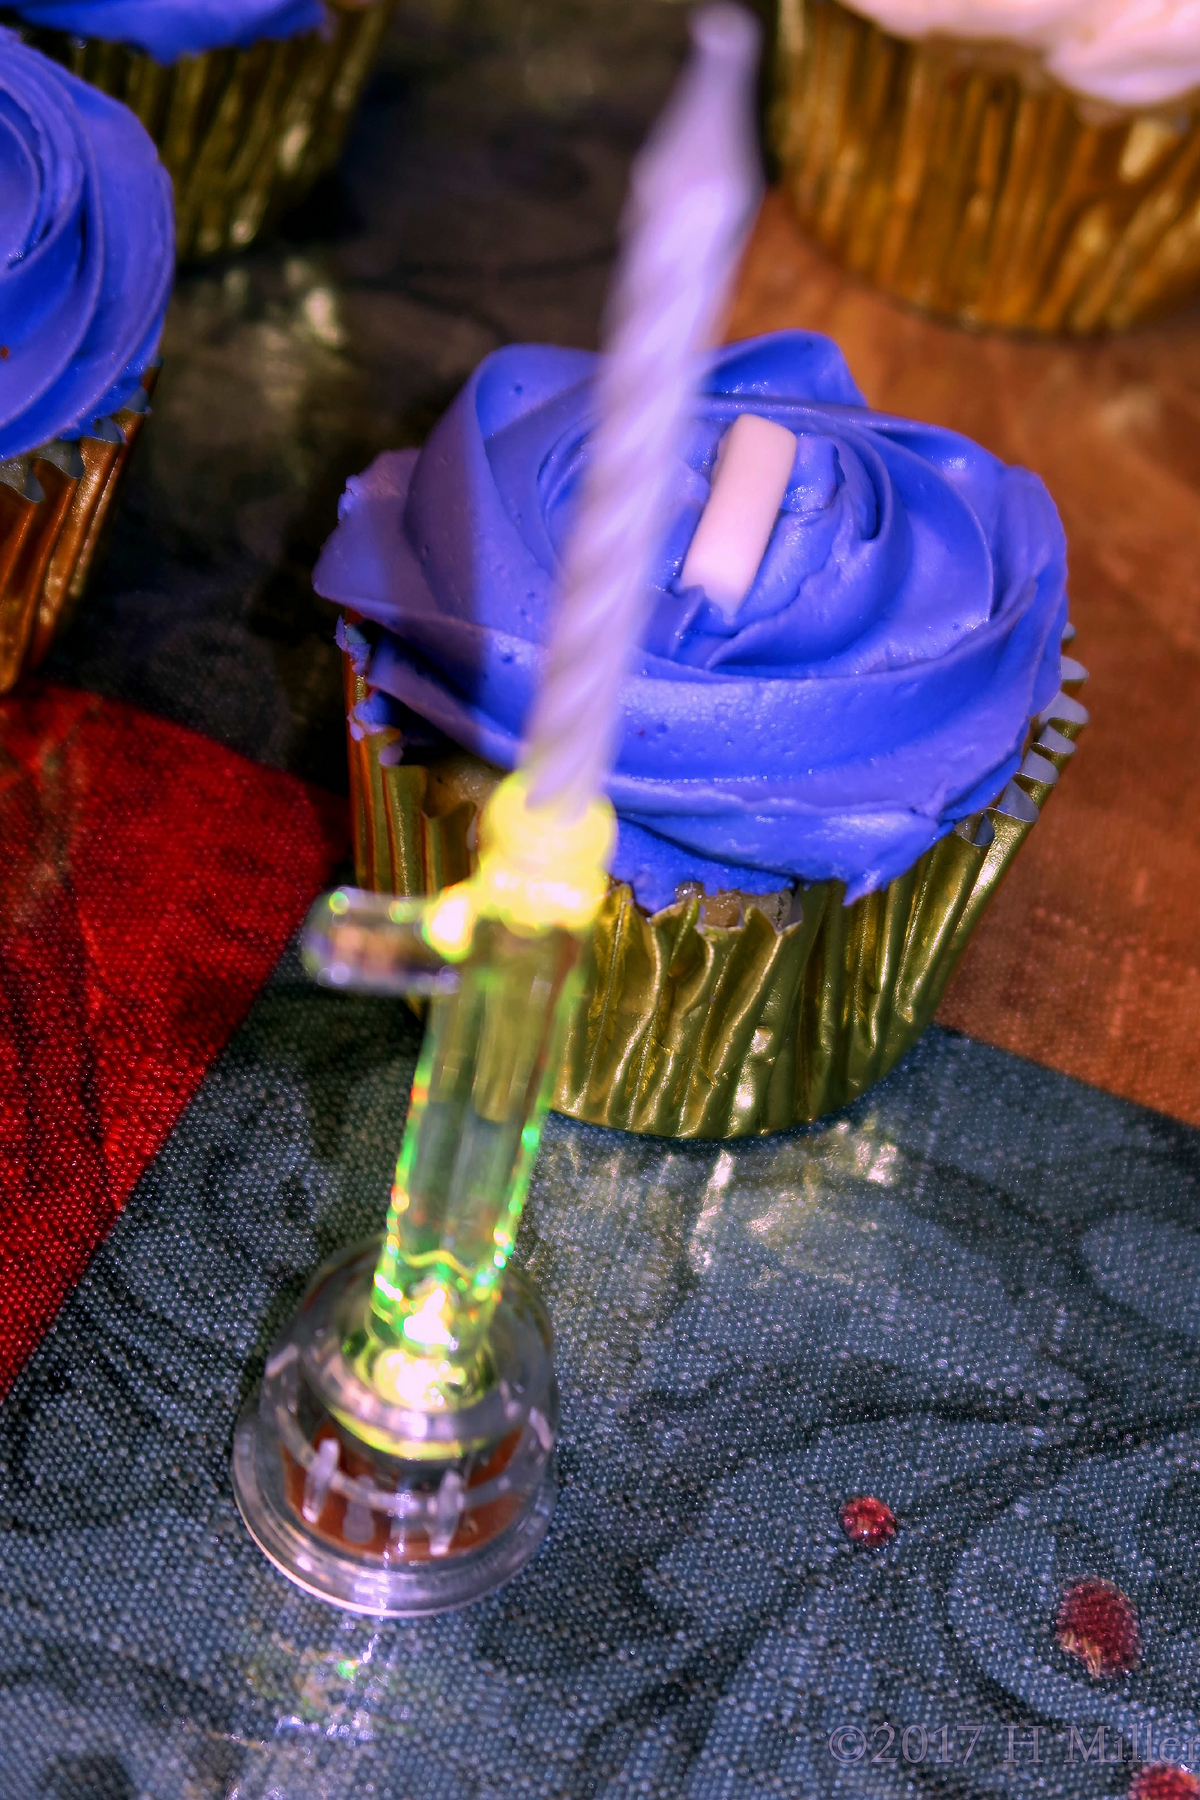 What A Beautiful Blue Rose Cupcake! 